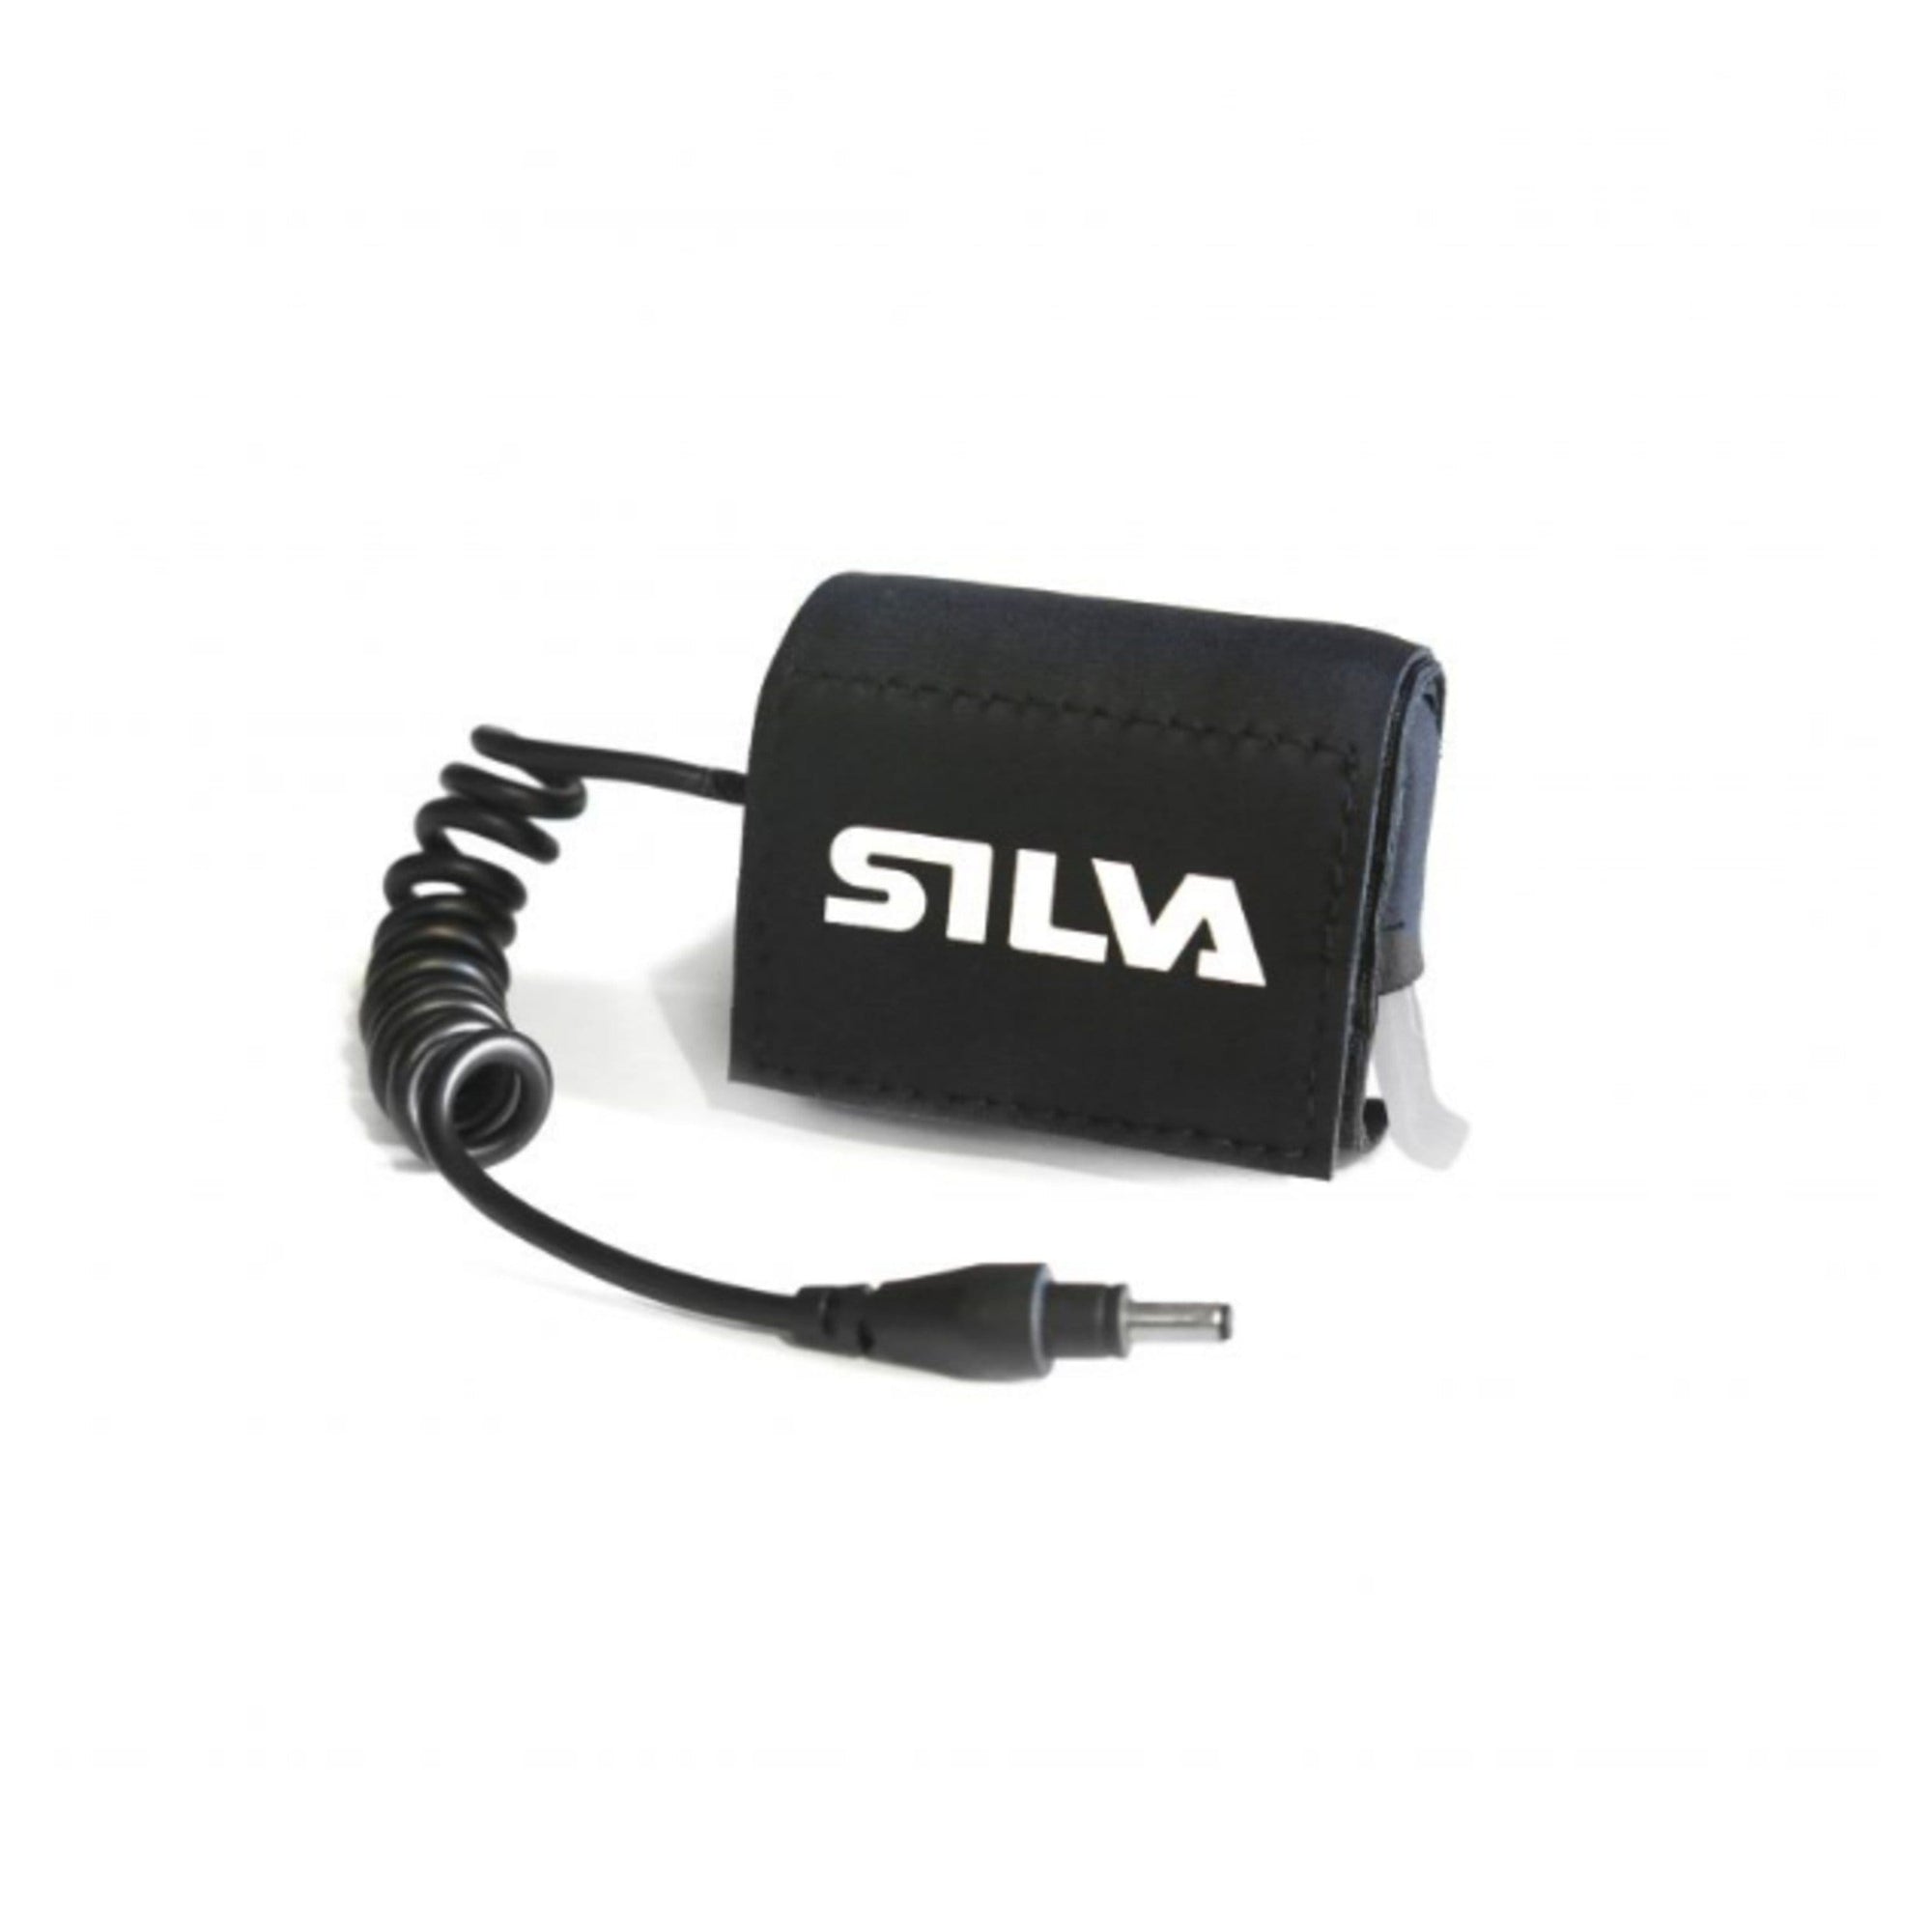 Silva 2.4Ah Soft Battery